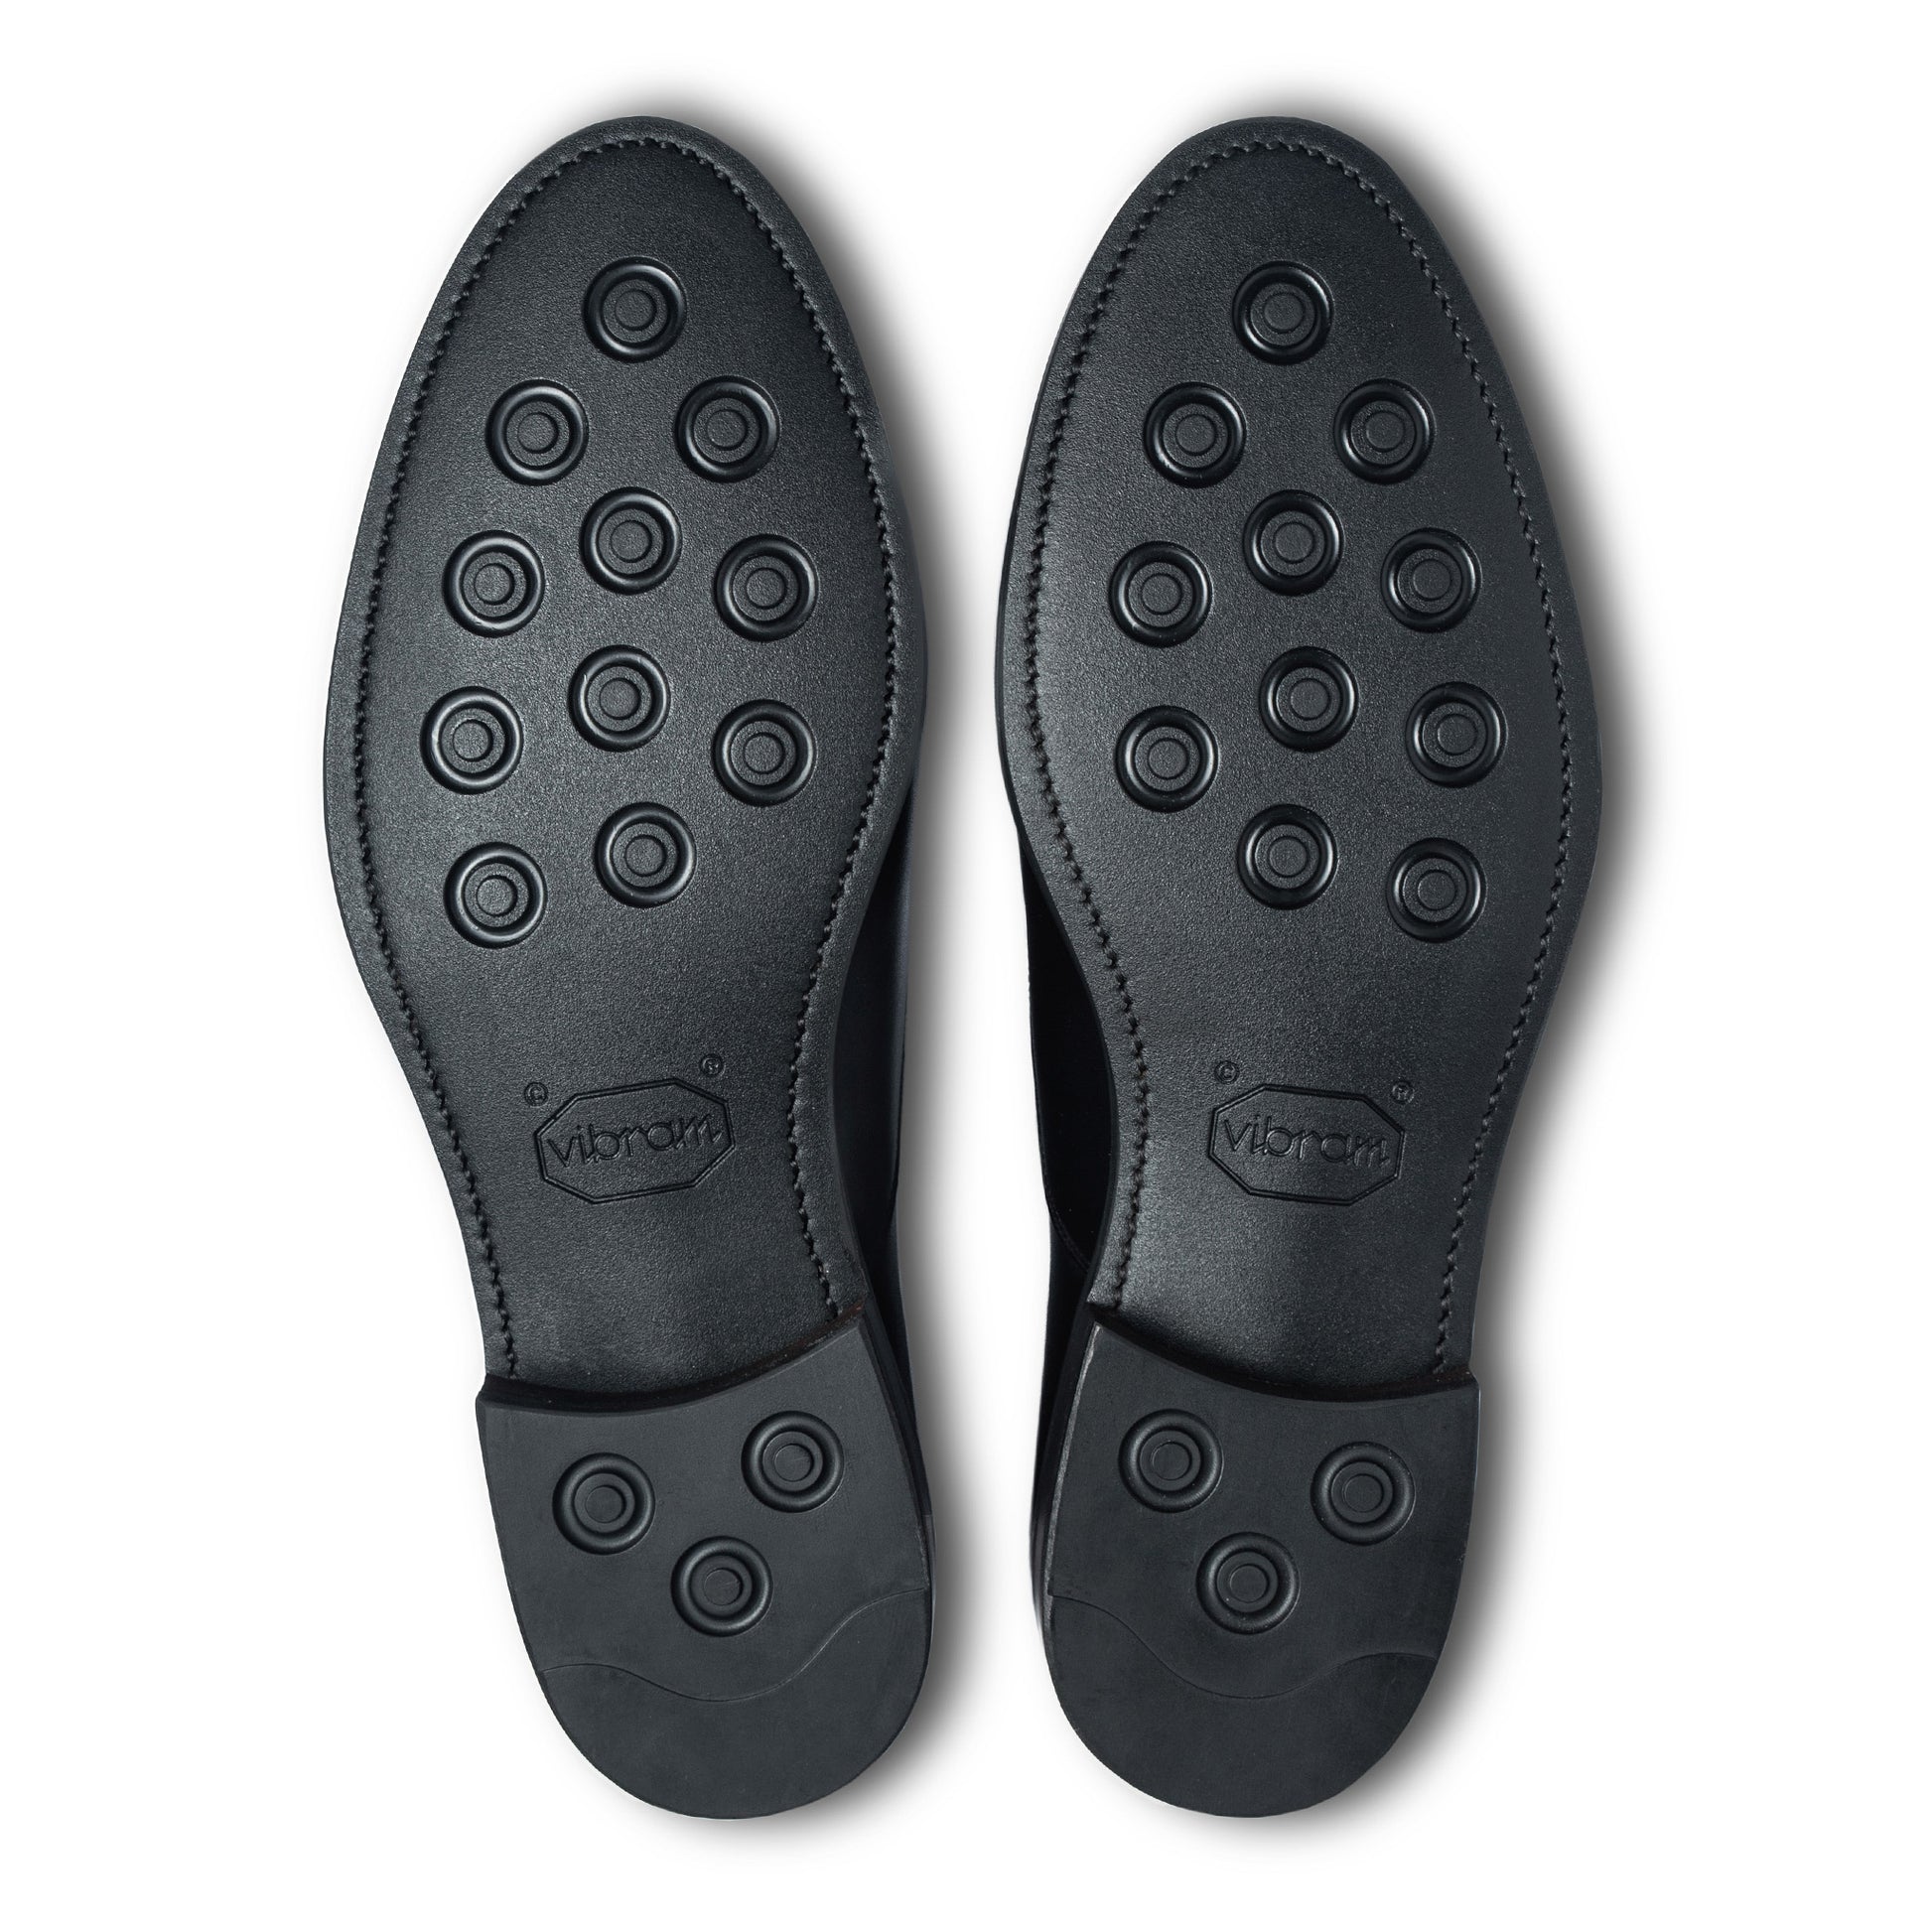 TLB Mallorca leather shoes 685 / MADISON / BOXCALF BLACK